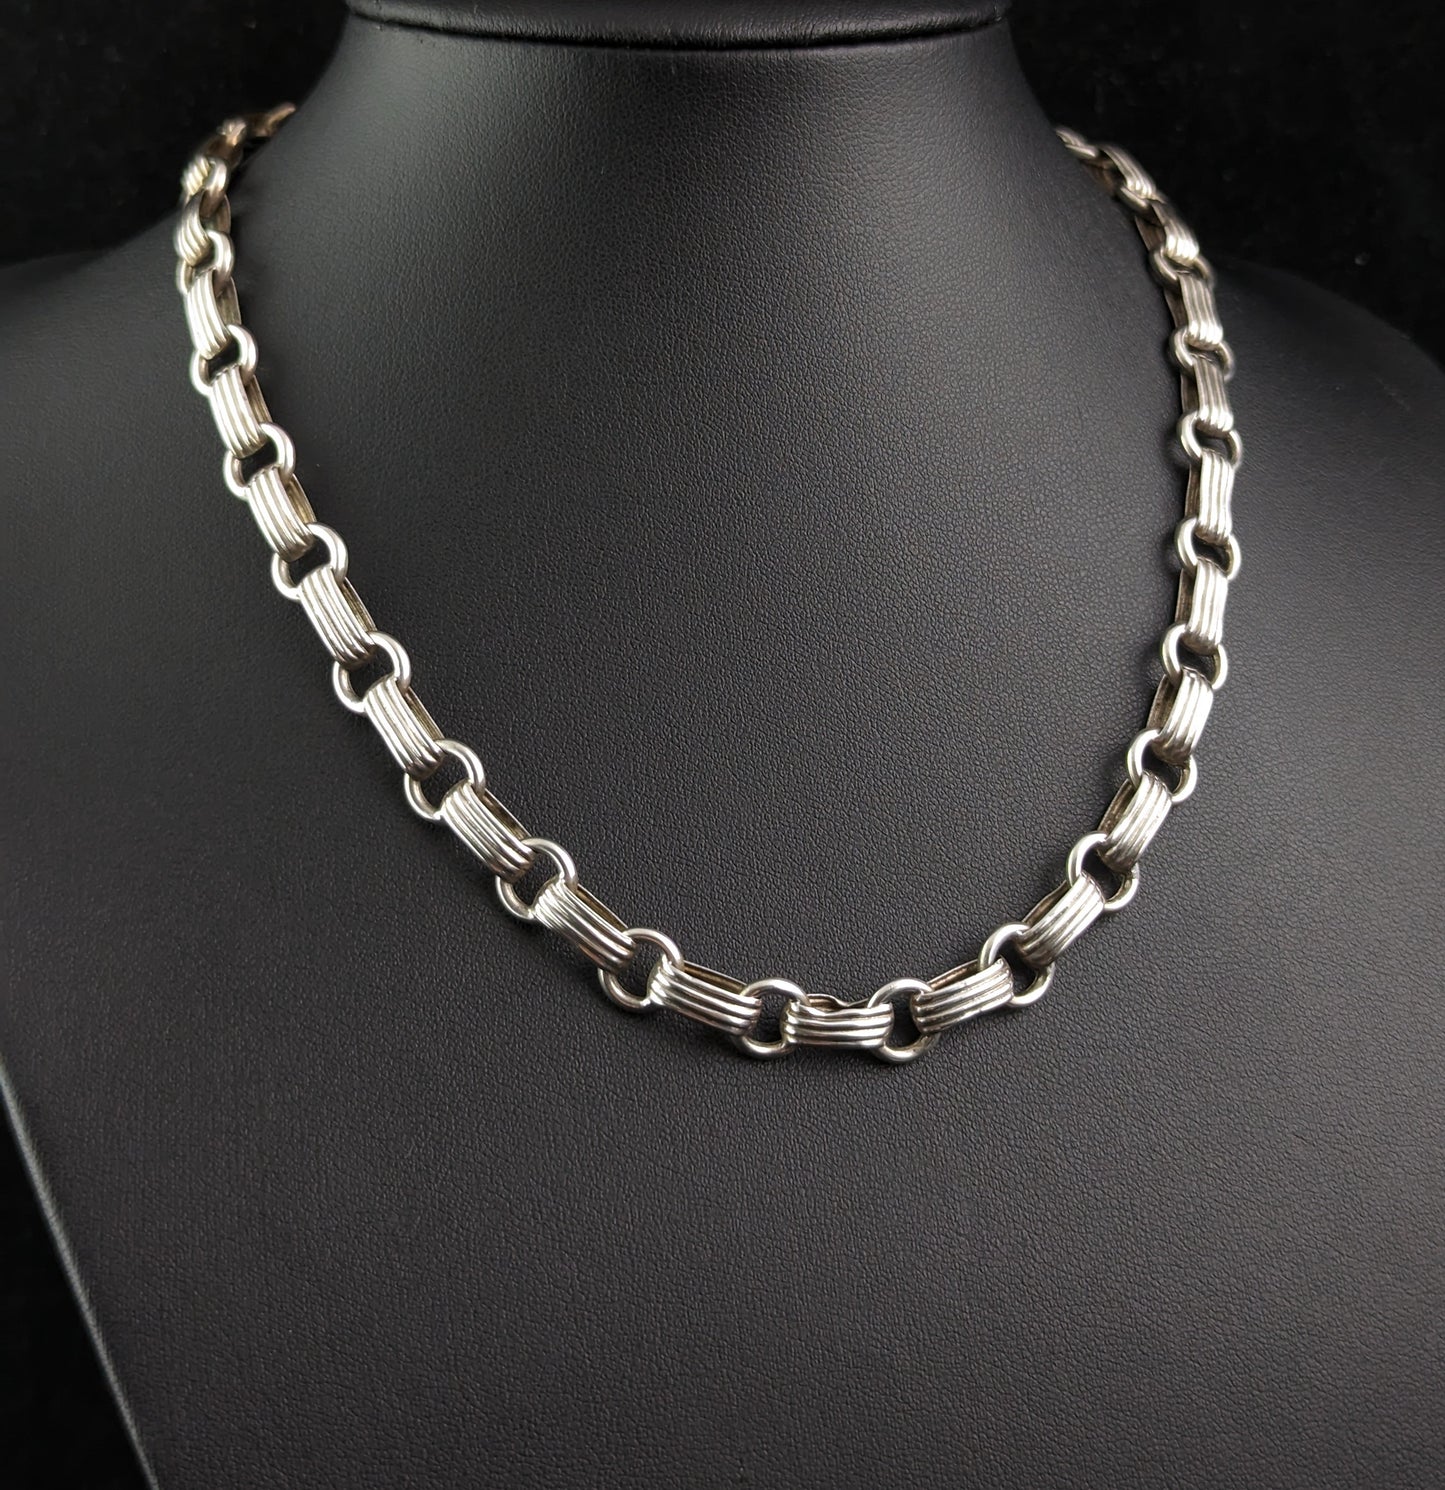 Antique Victorian silver collar necklace, Book chain